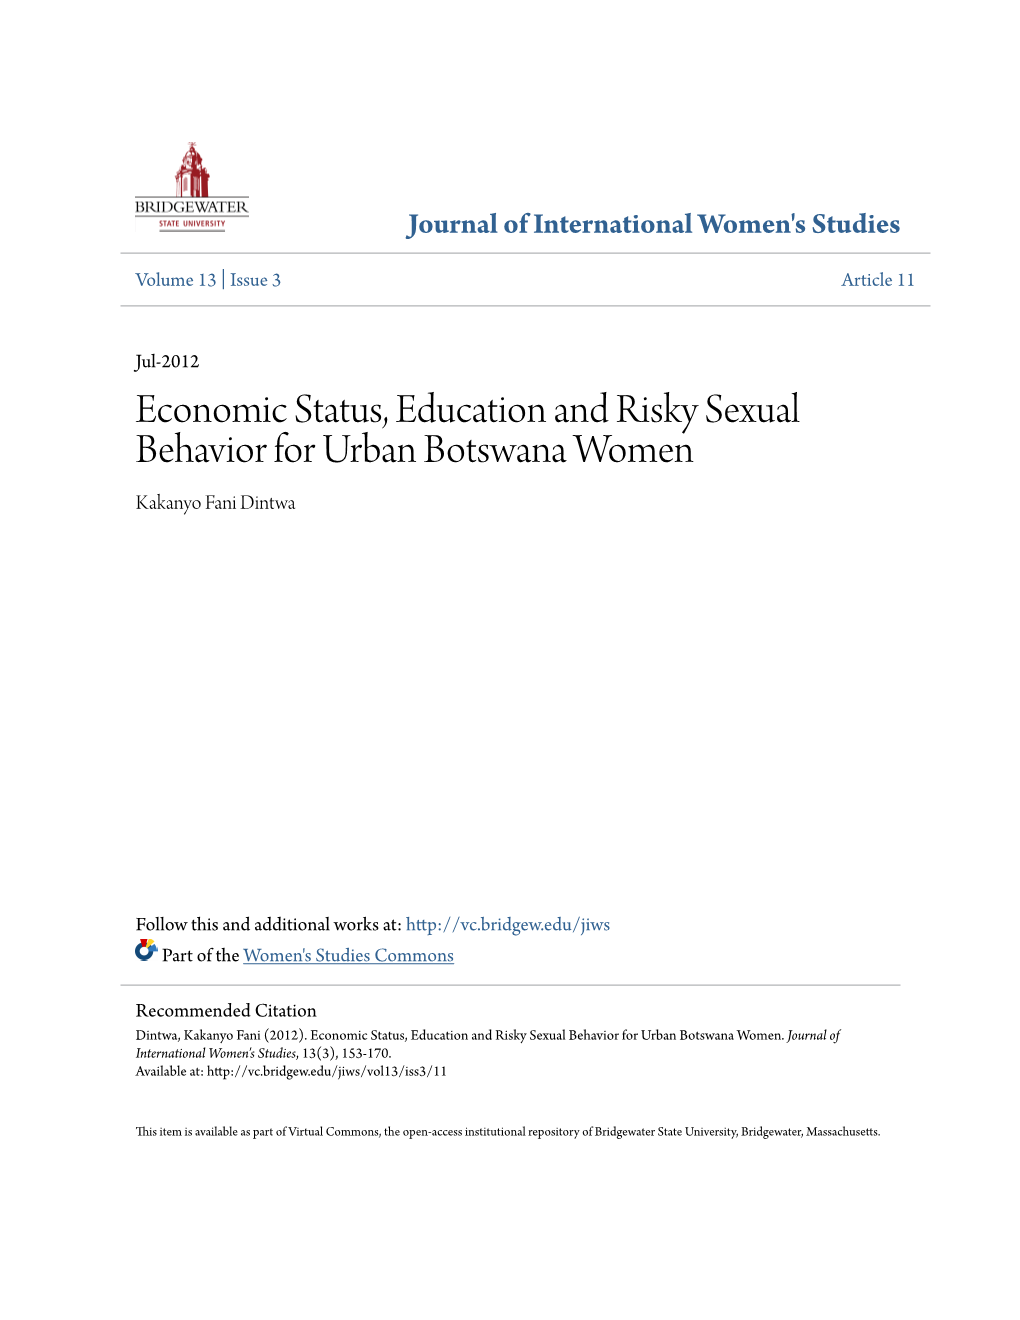 Economic Status, Education and Risky Sexual Behavior for Urban Botswana Women Kakanyo Fani Dintwa